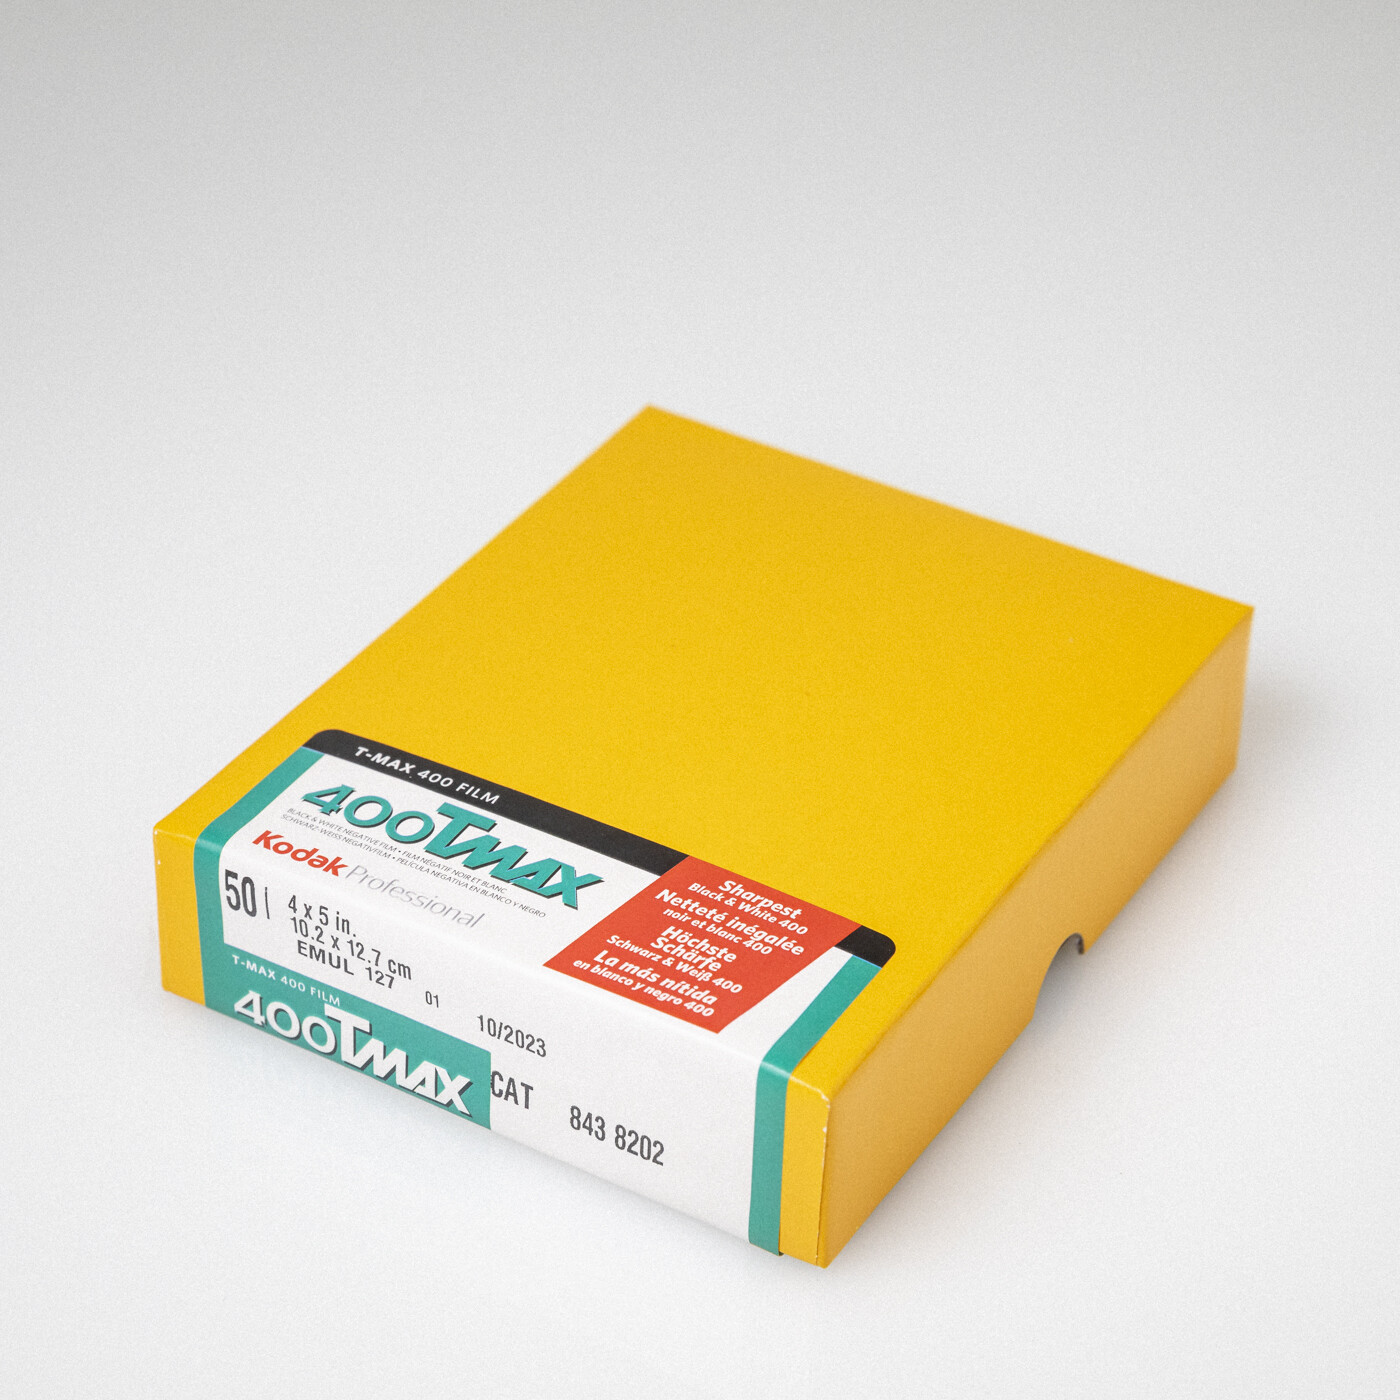 Expired 10/23 - Kodak TMAX 400 4x5 [50 sheets]